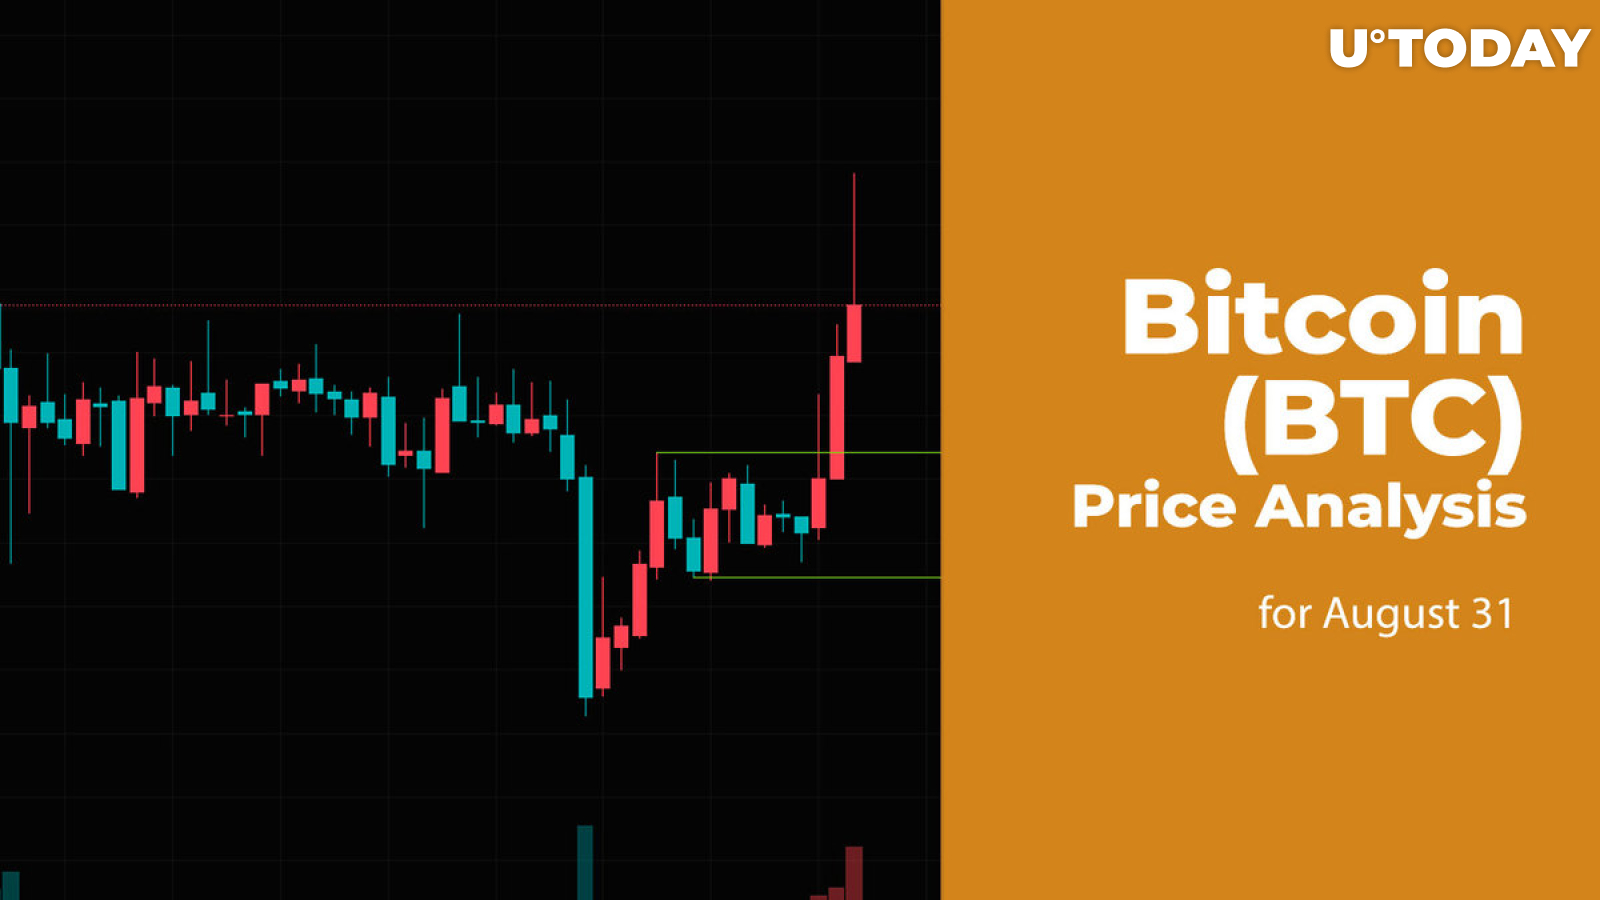 Bitcoin (BTC) Price Analysis for August 31